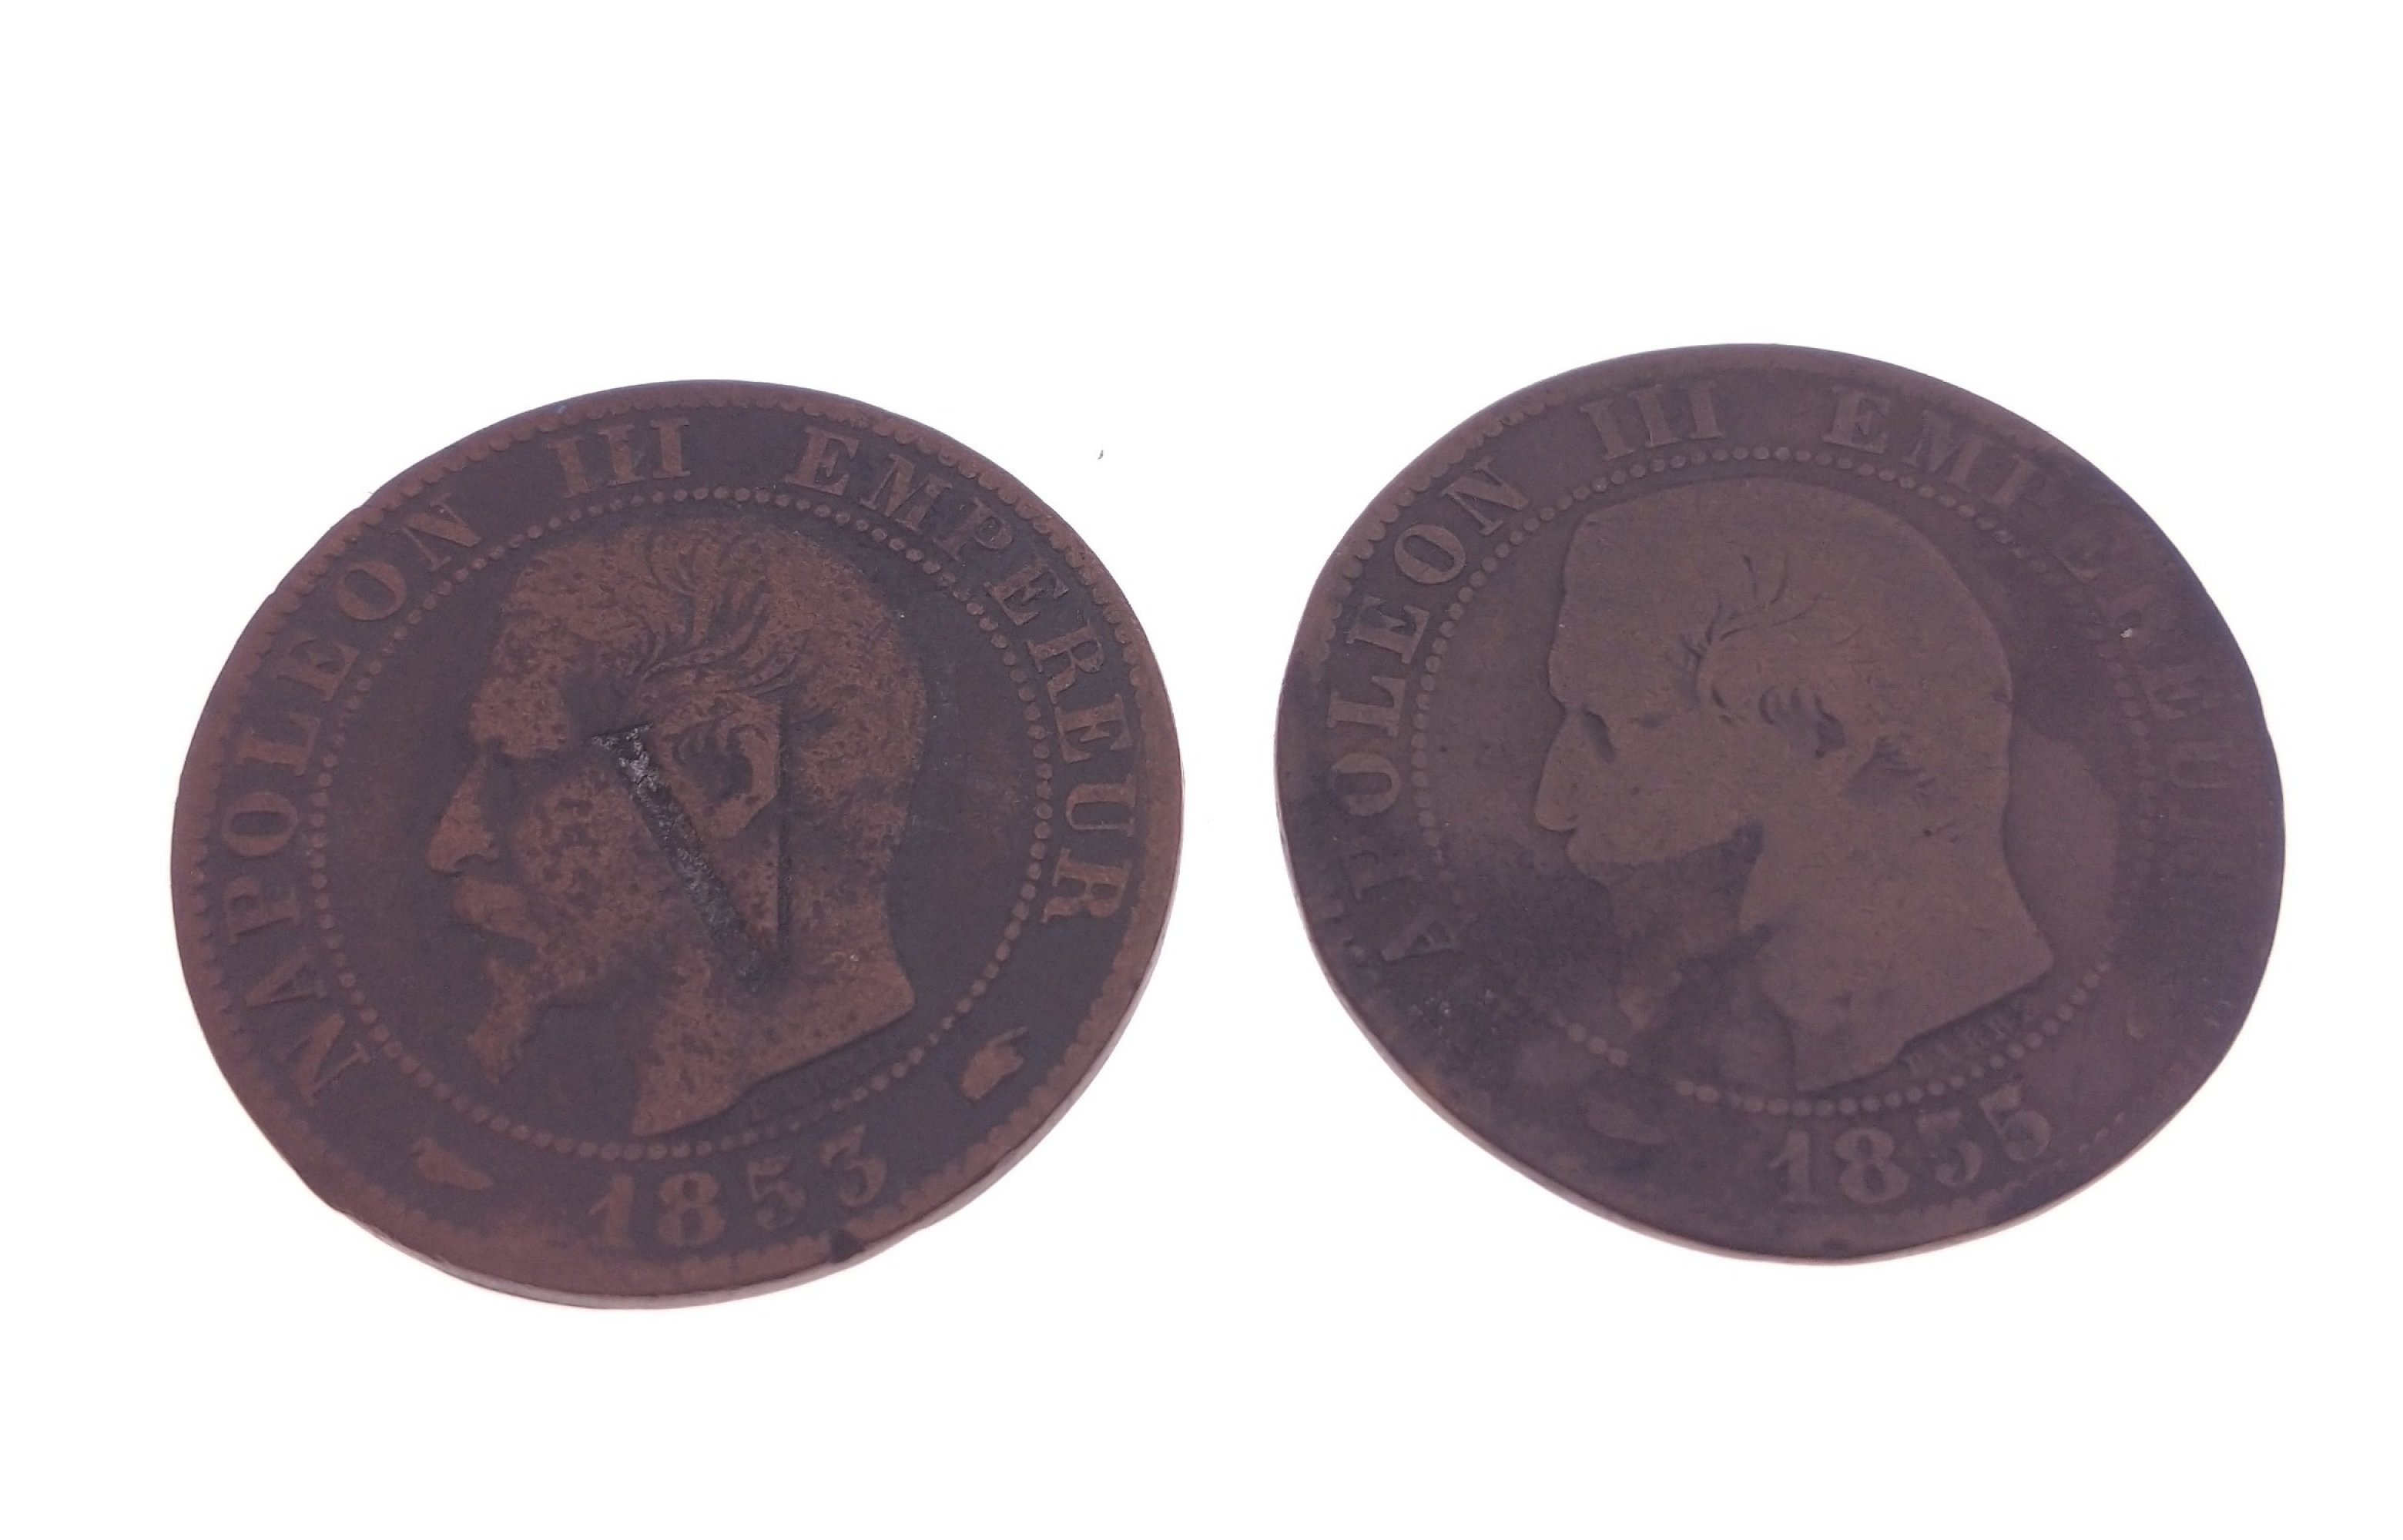 Two 1855 5 Centimes Napoleon III (1808-1873), Empereur de France (1852-1870) coins, bronze,